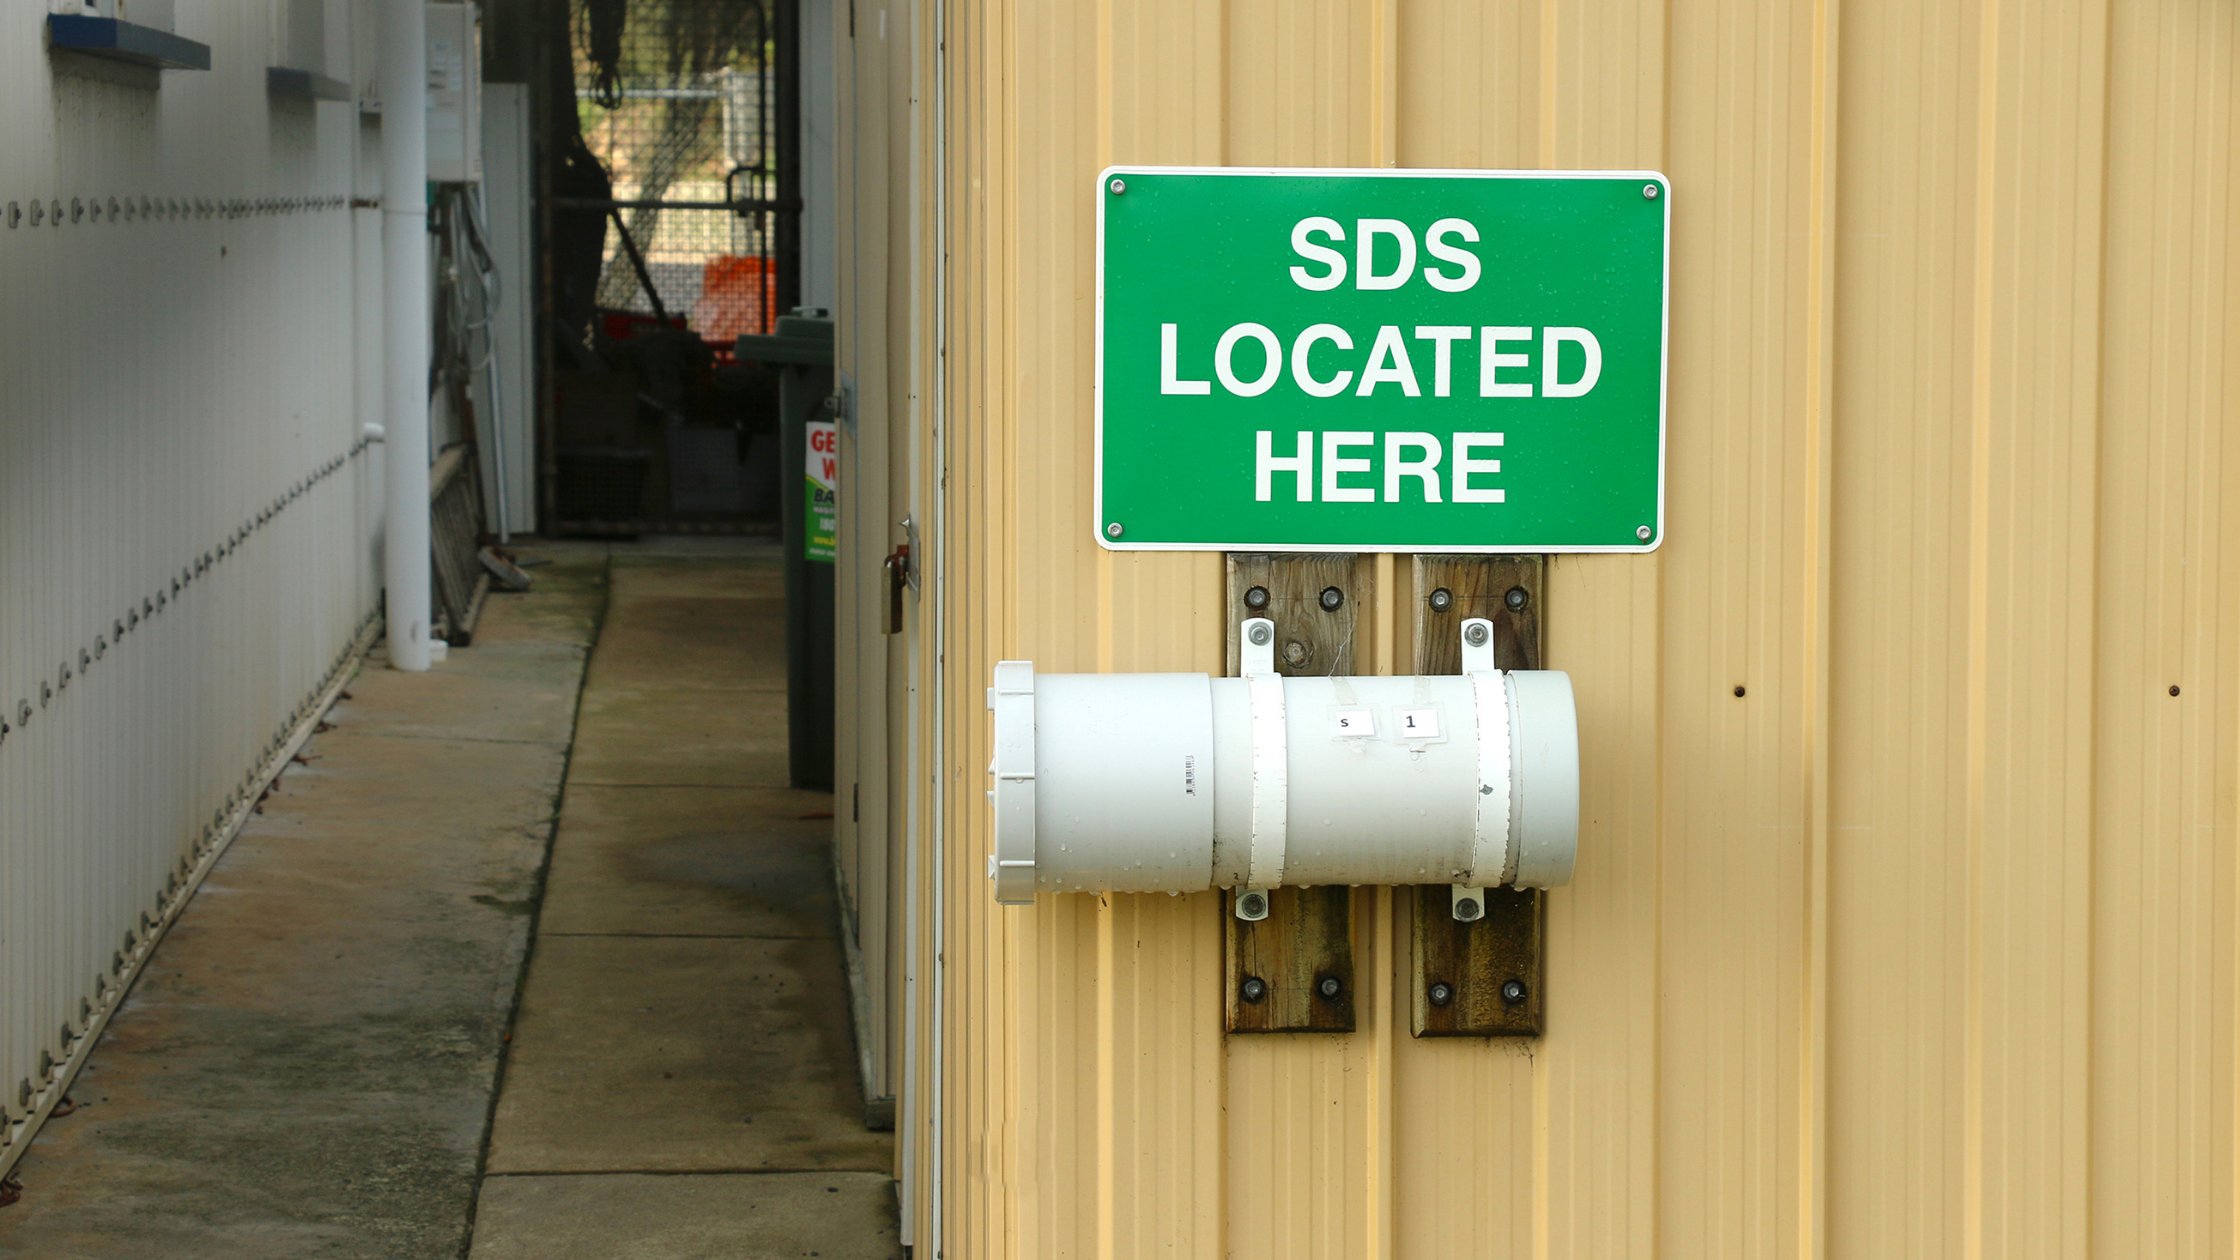 safety data sheets (SDS)